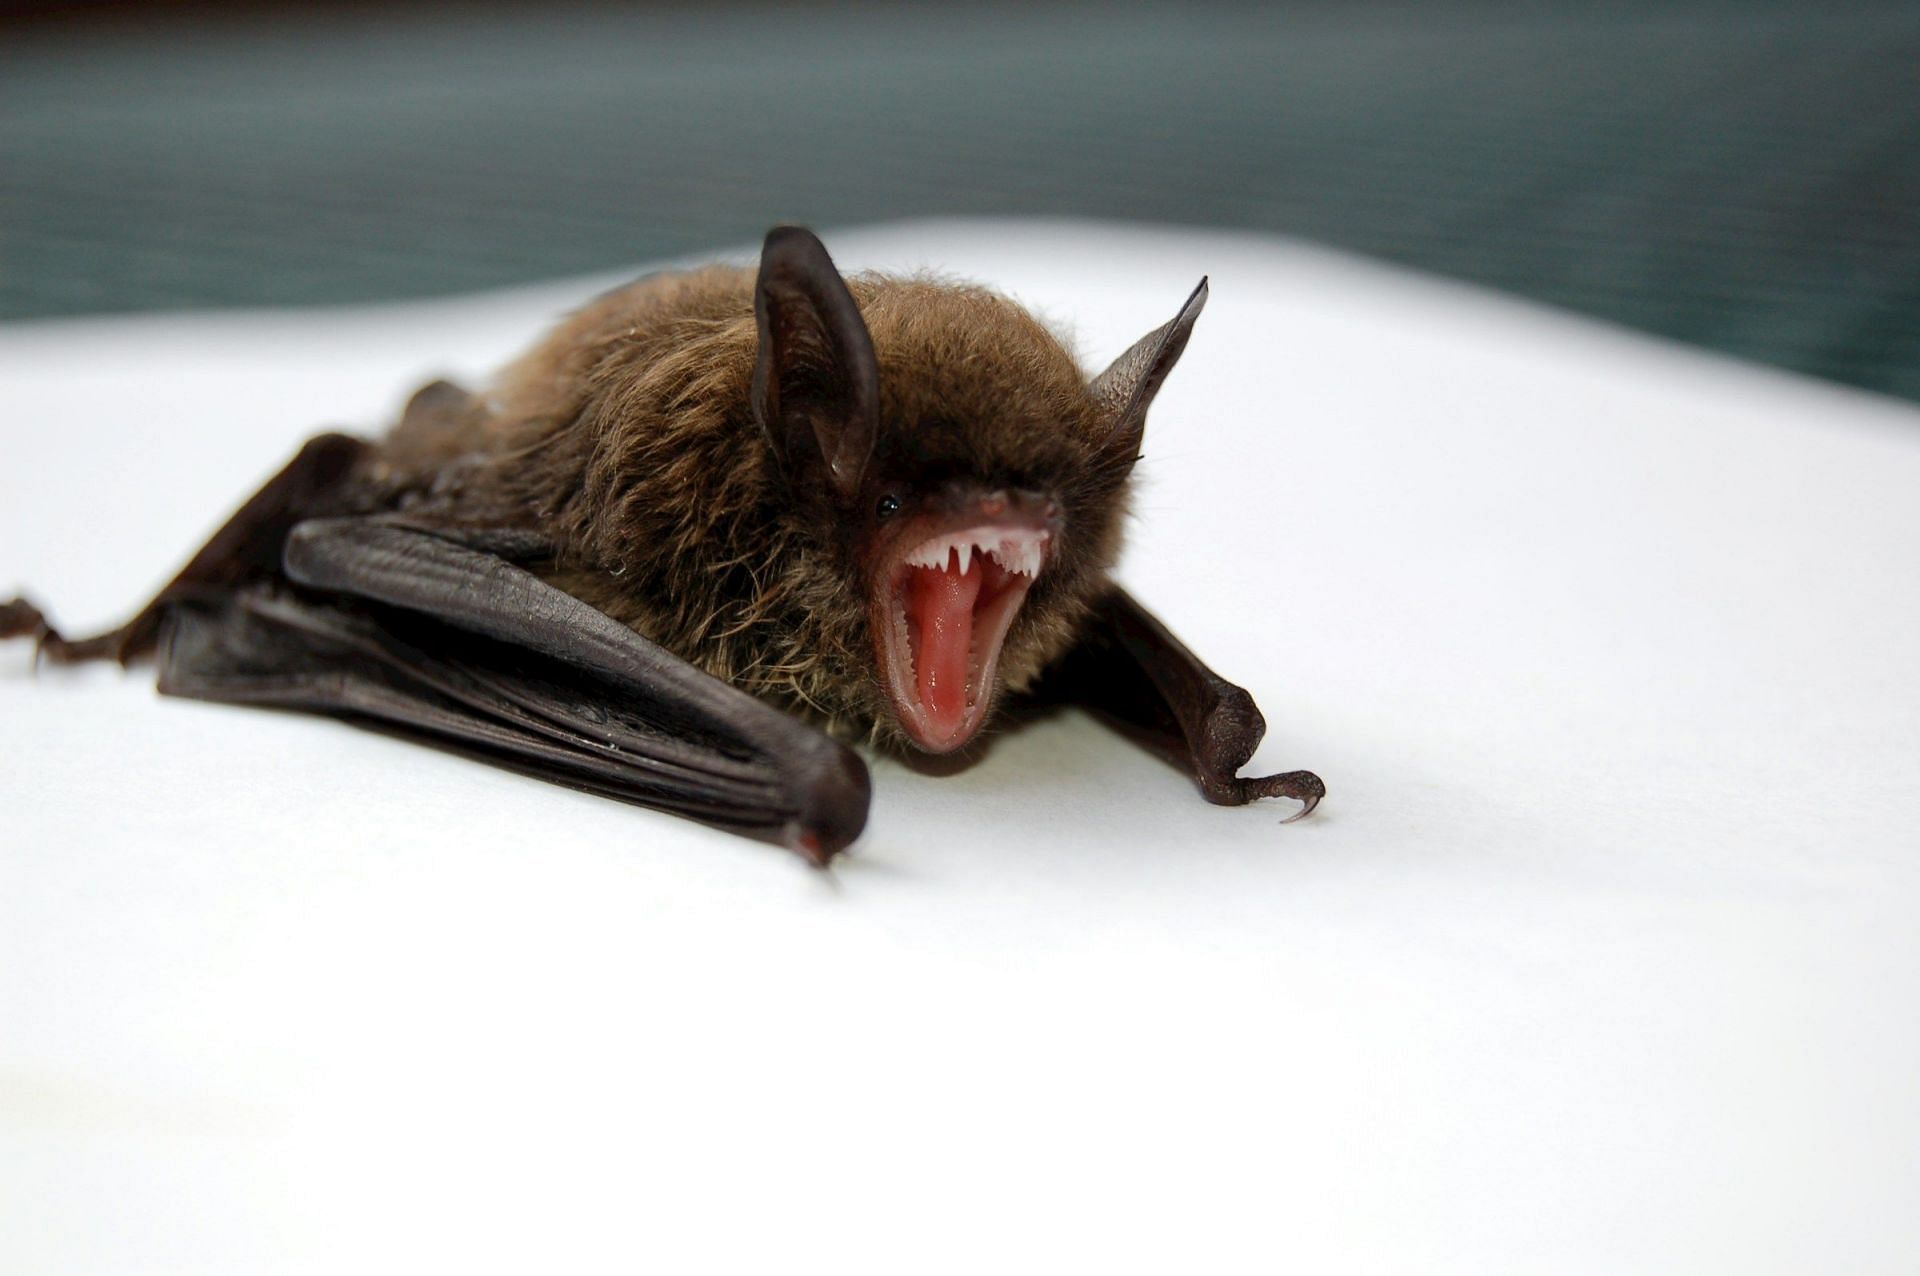 Bat bite a Human (Image via Unsplash/Todd Cravens)